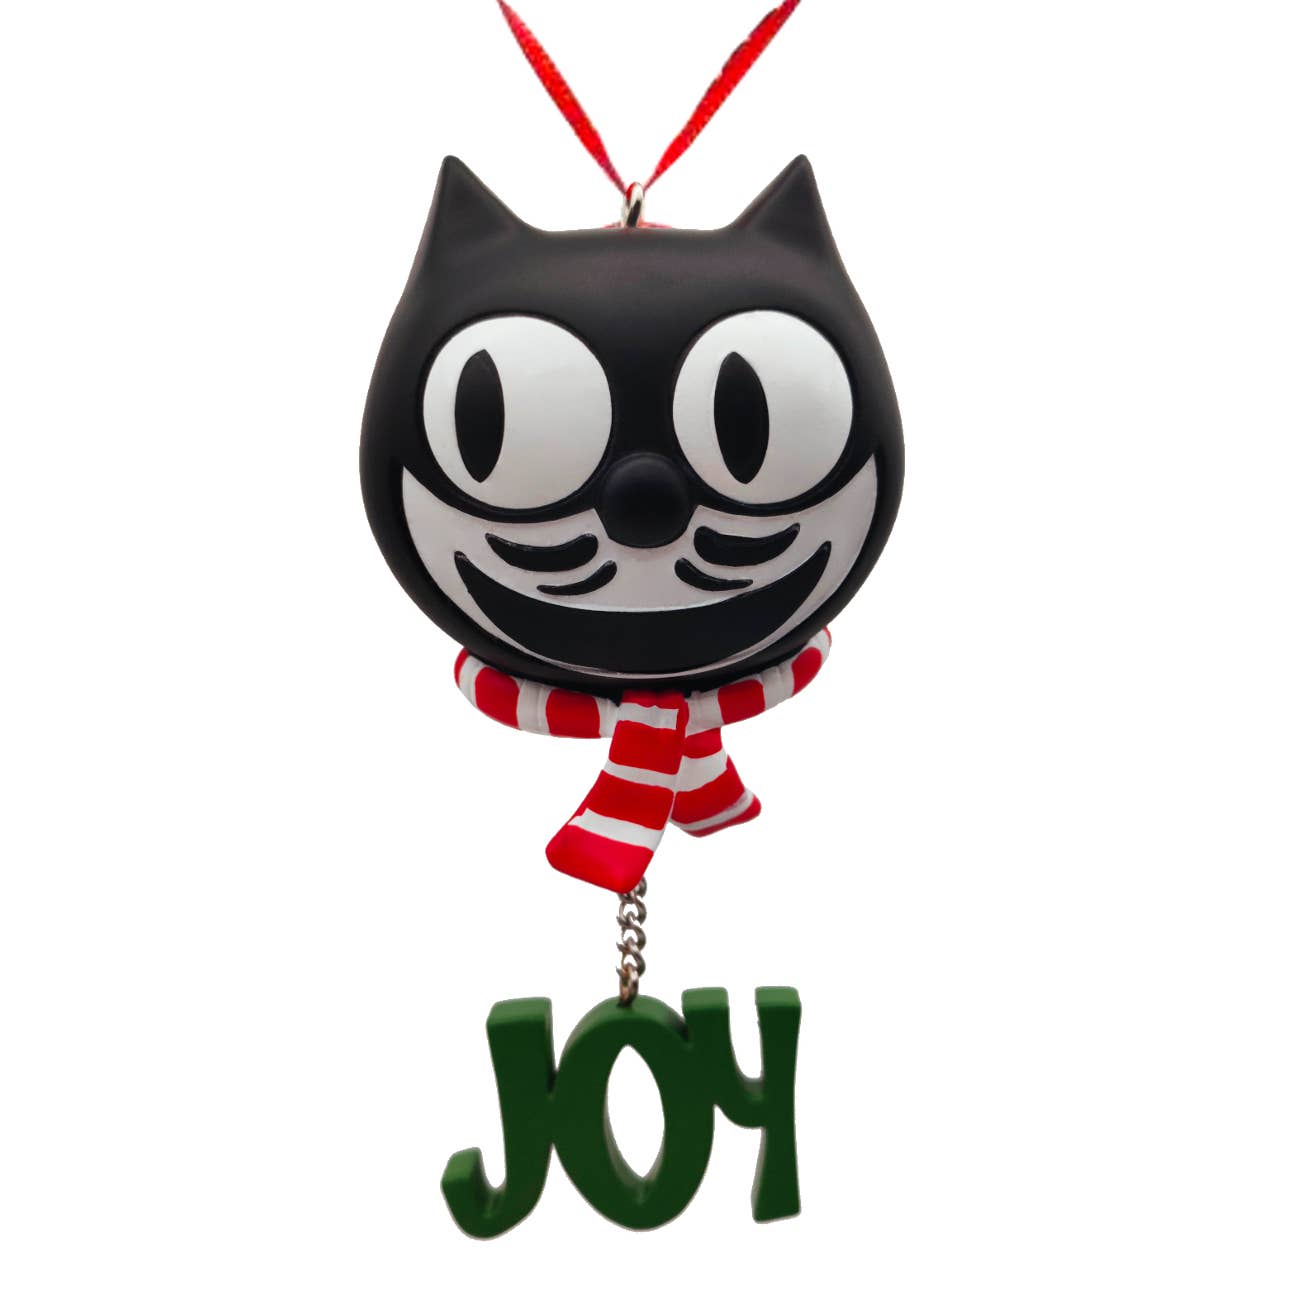 Kit-Cat Klock Christmas Ornament - Joy